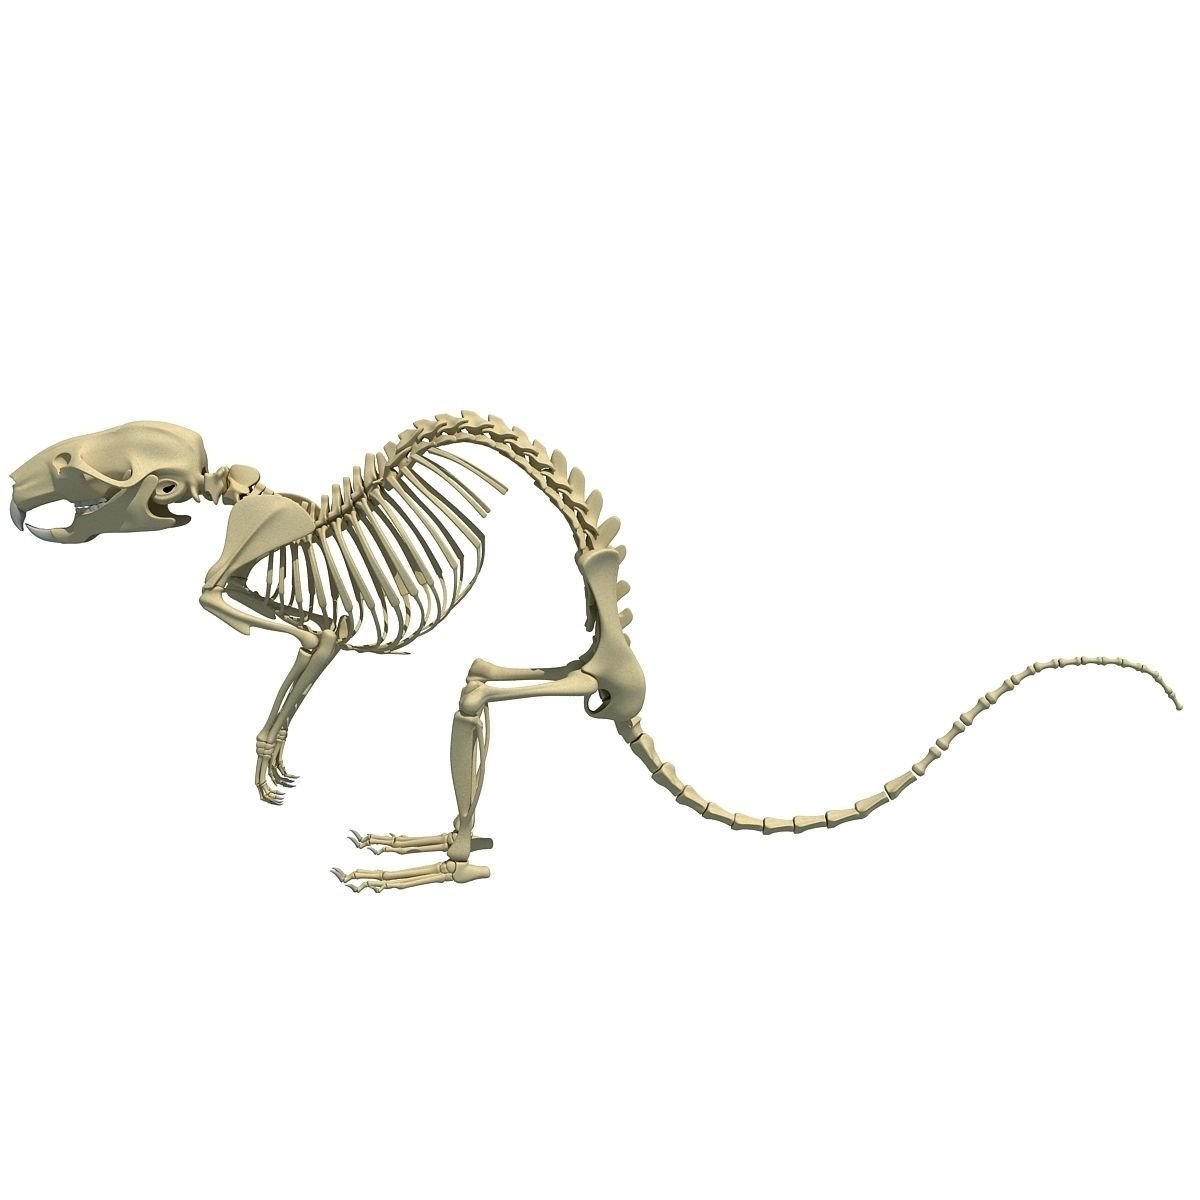 Скелет мыши фото с описанием костей